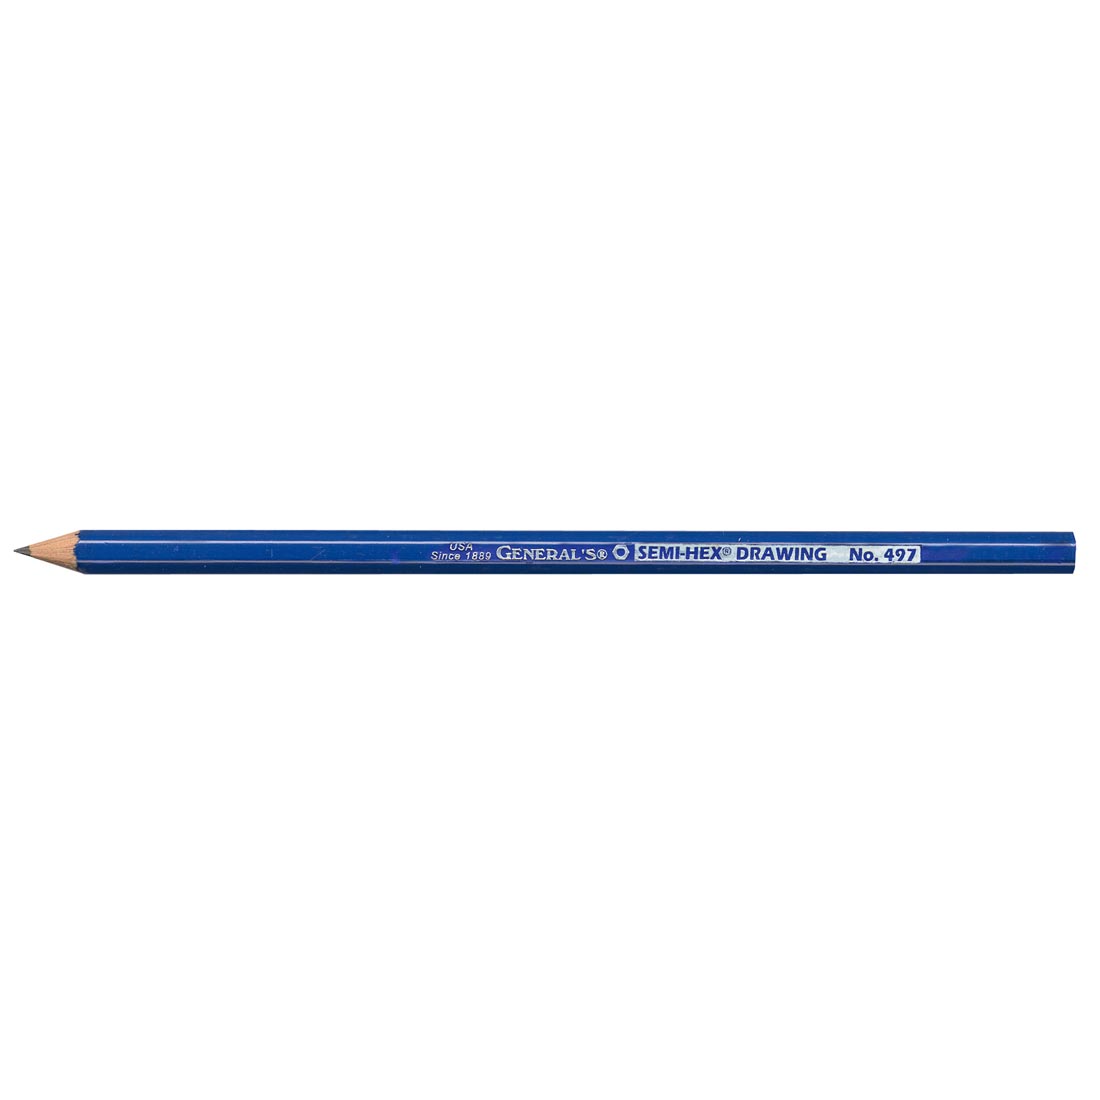 General's Semi-Hex Drawing Pencil 4B